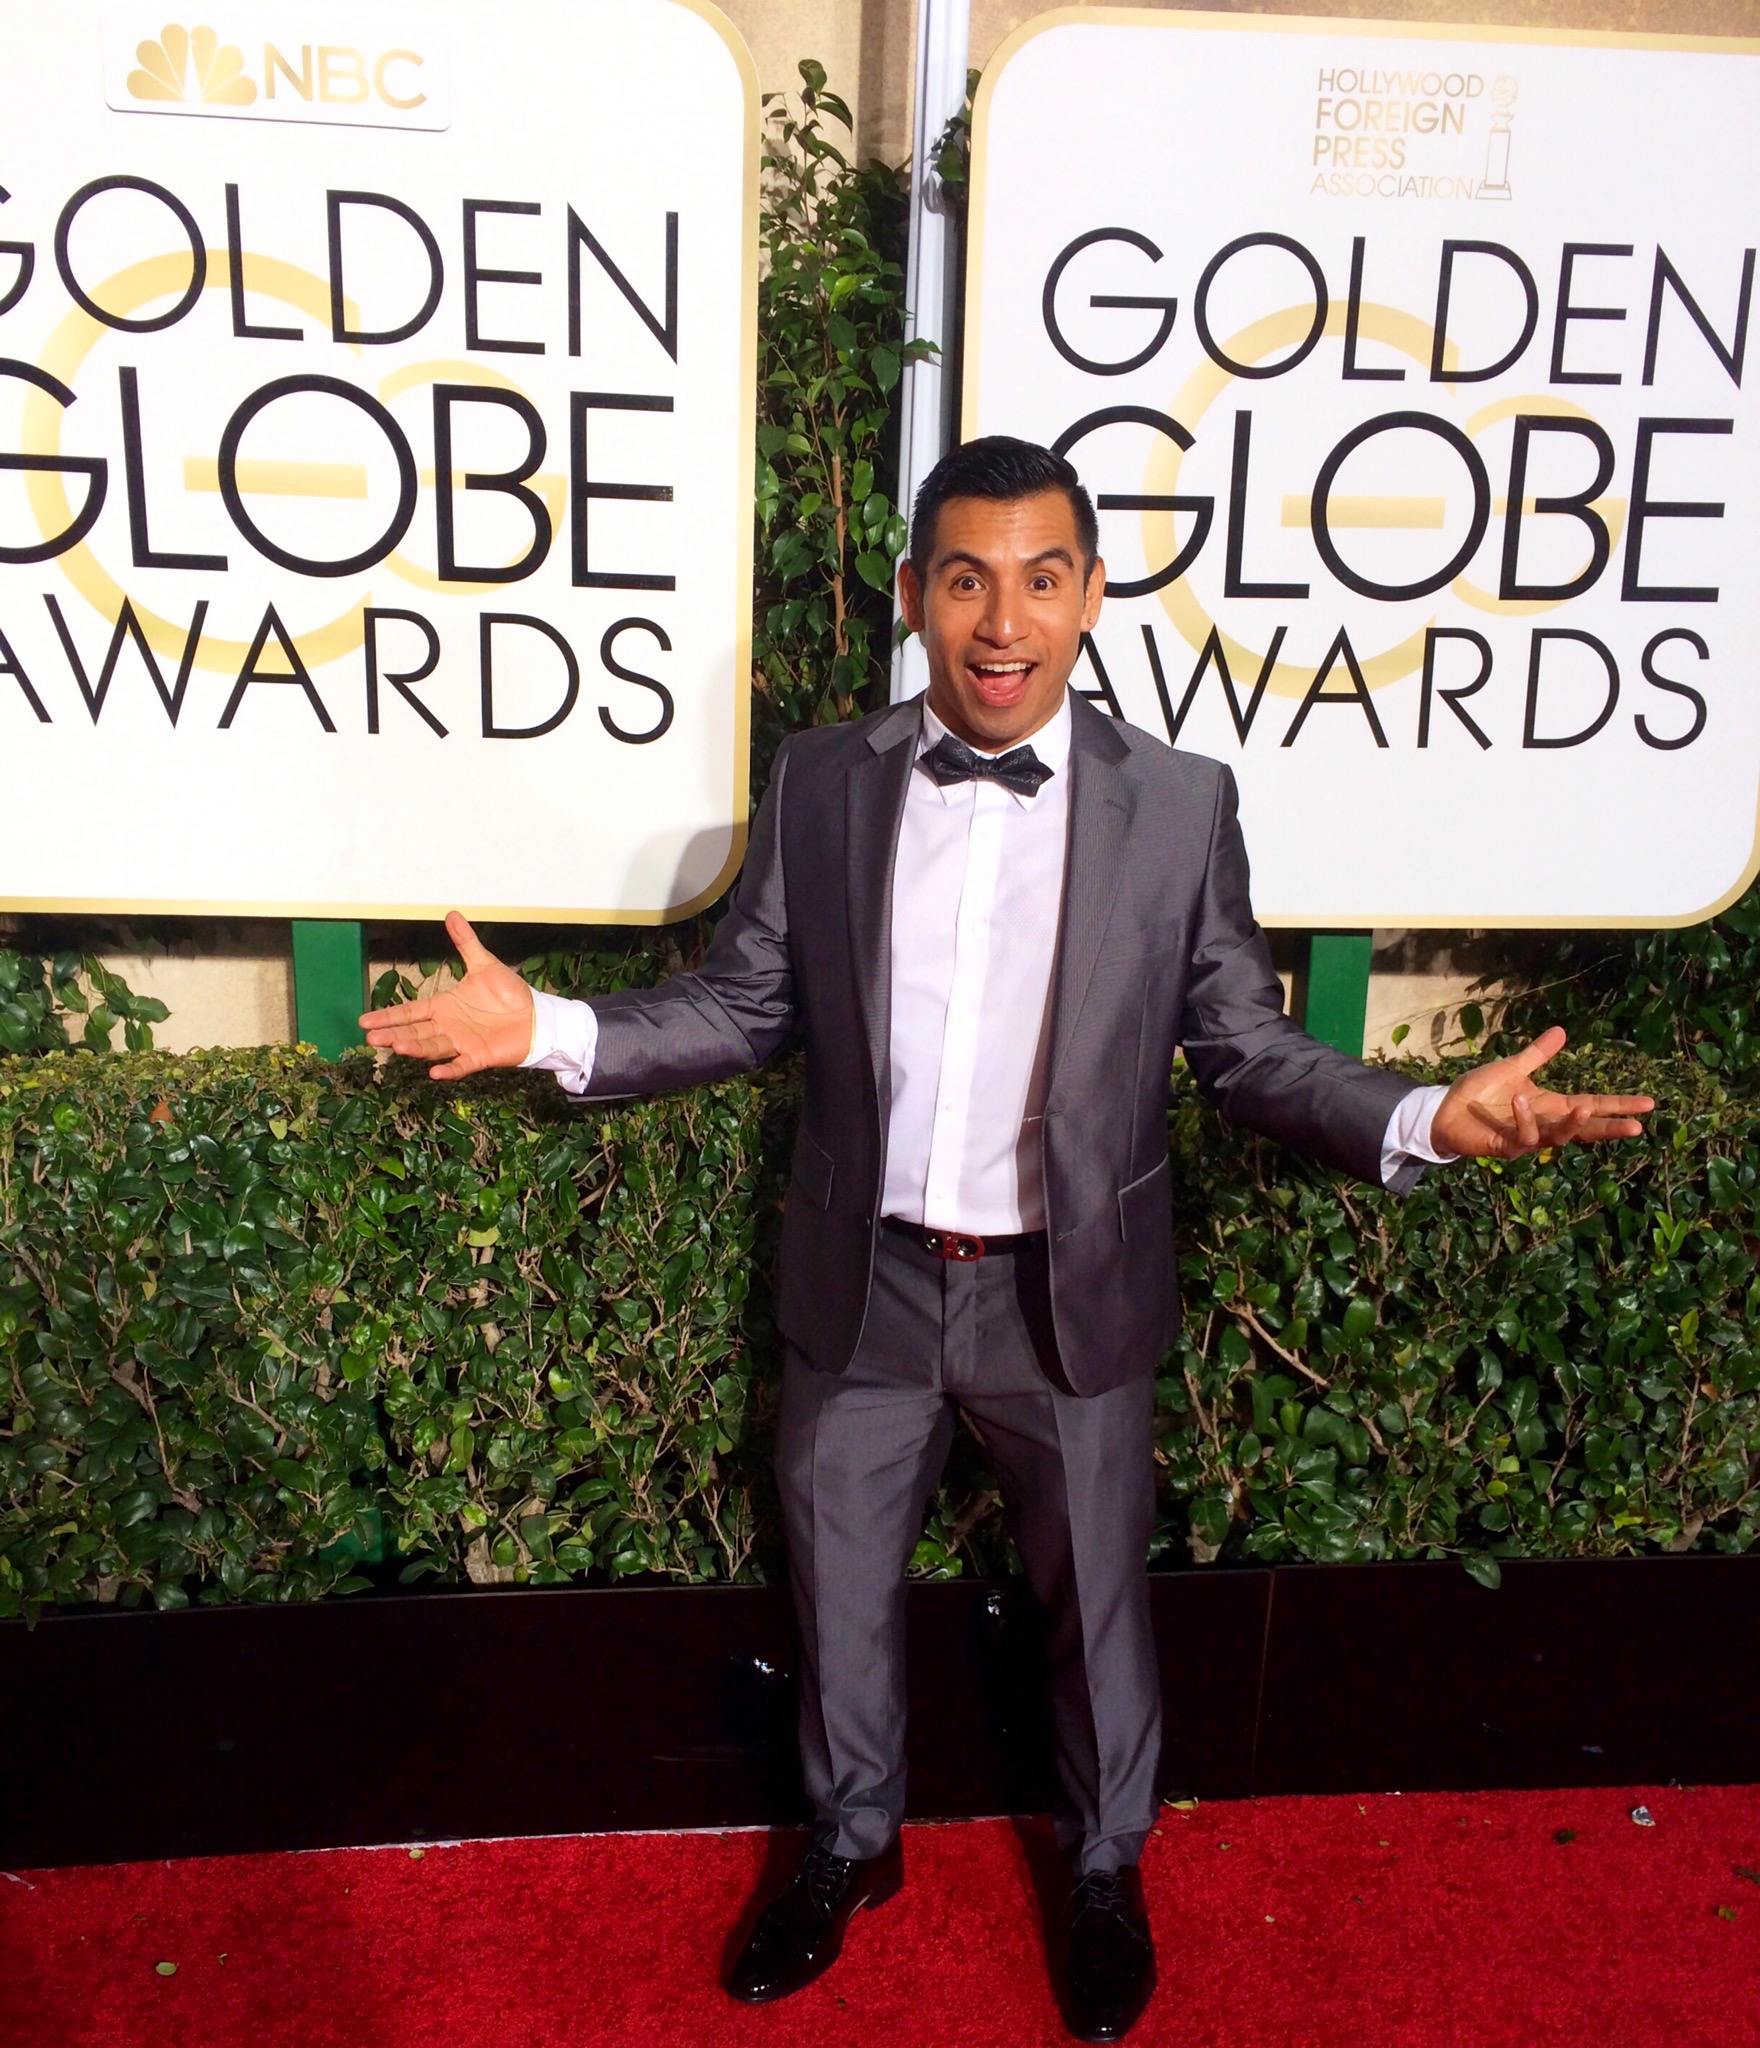 Actor Eloy Mendez attending the 2015 Golden Globe Awards.